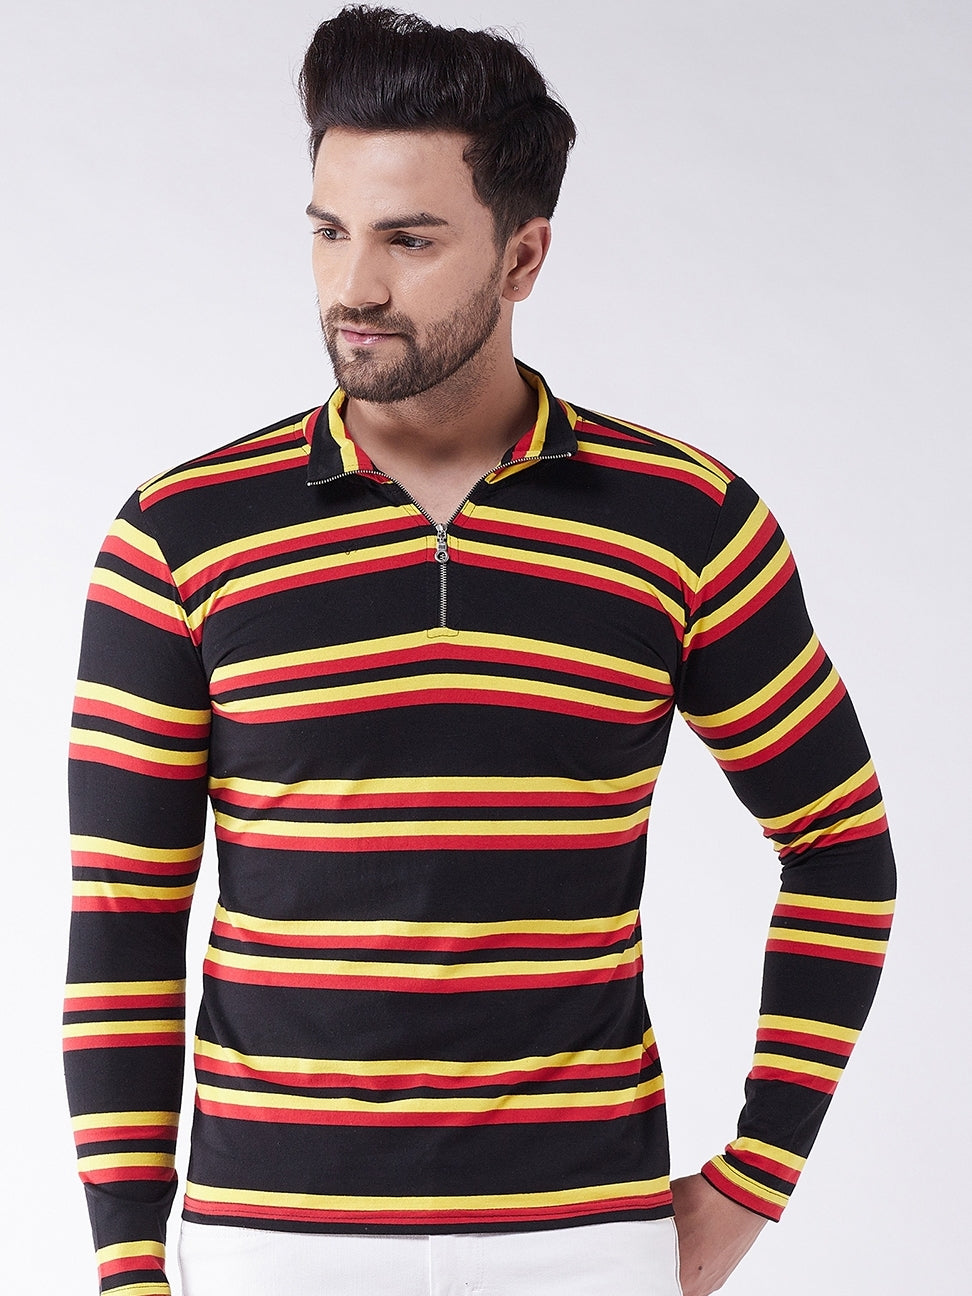 Black/Red/Yellow Zipper Striper Tshirt